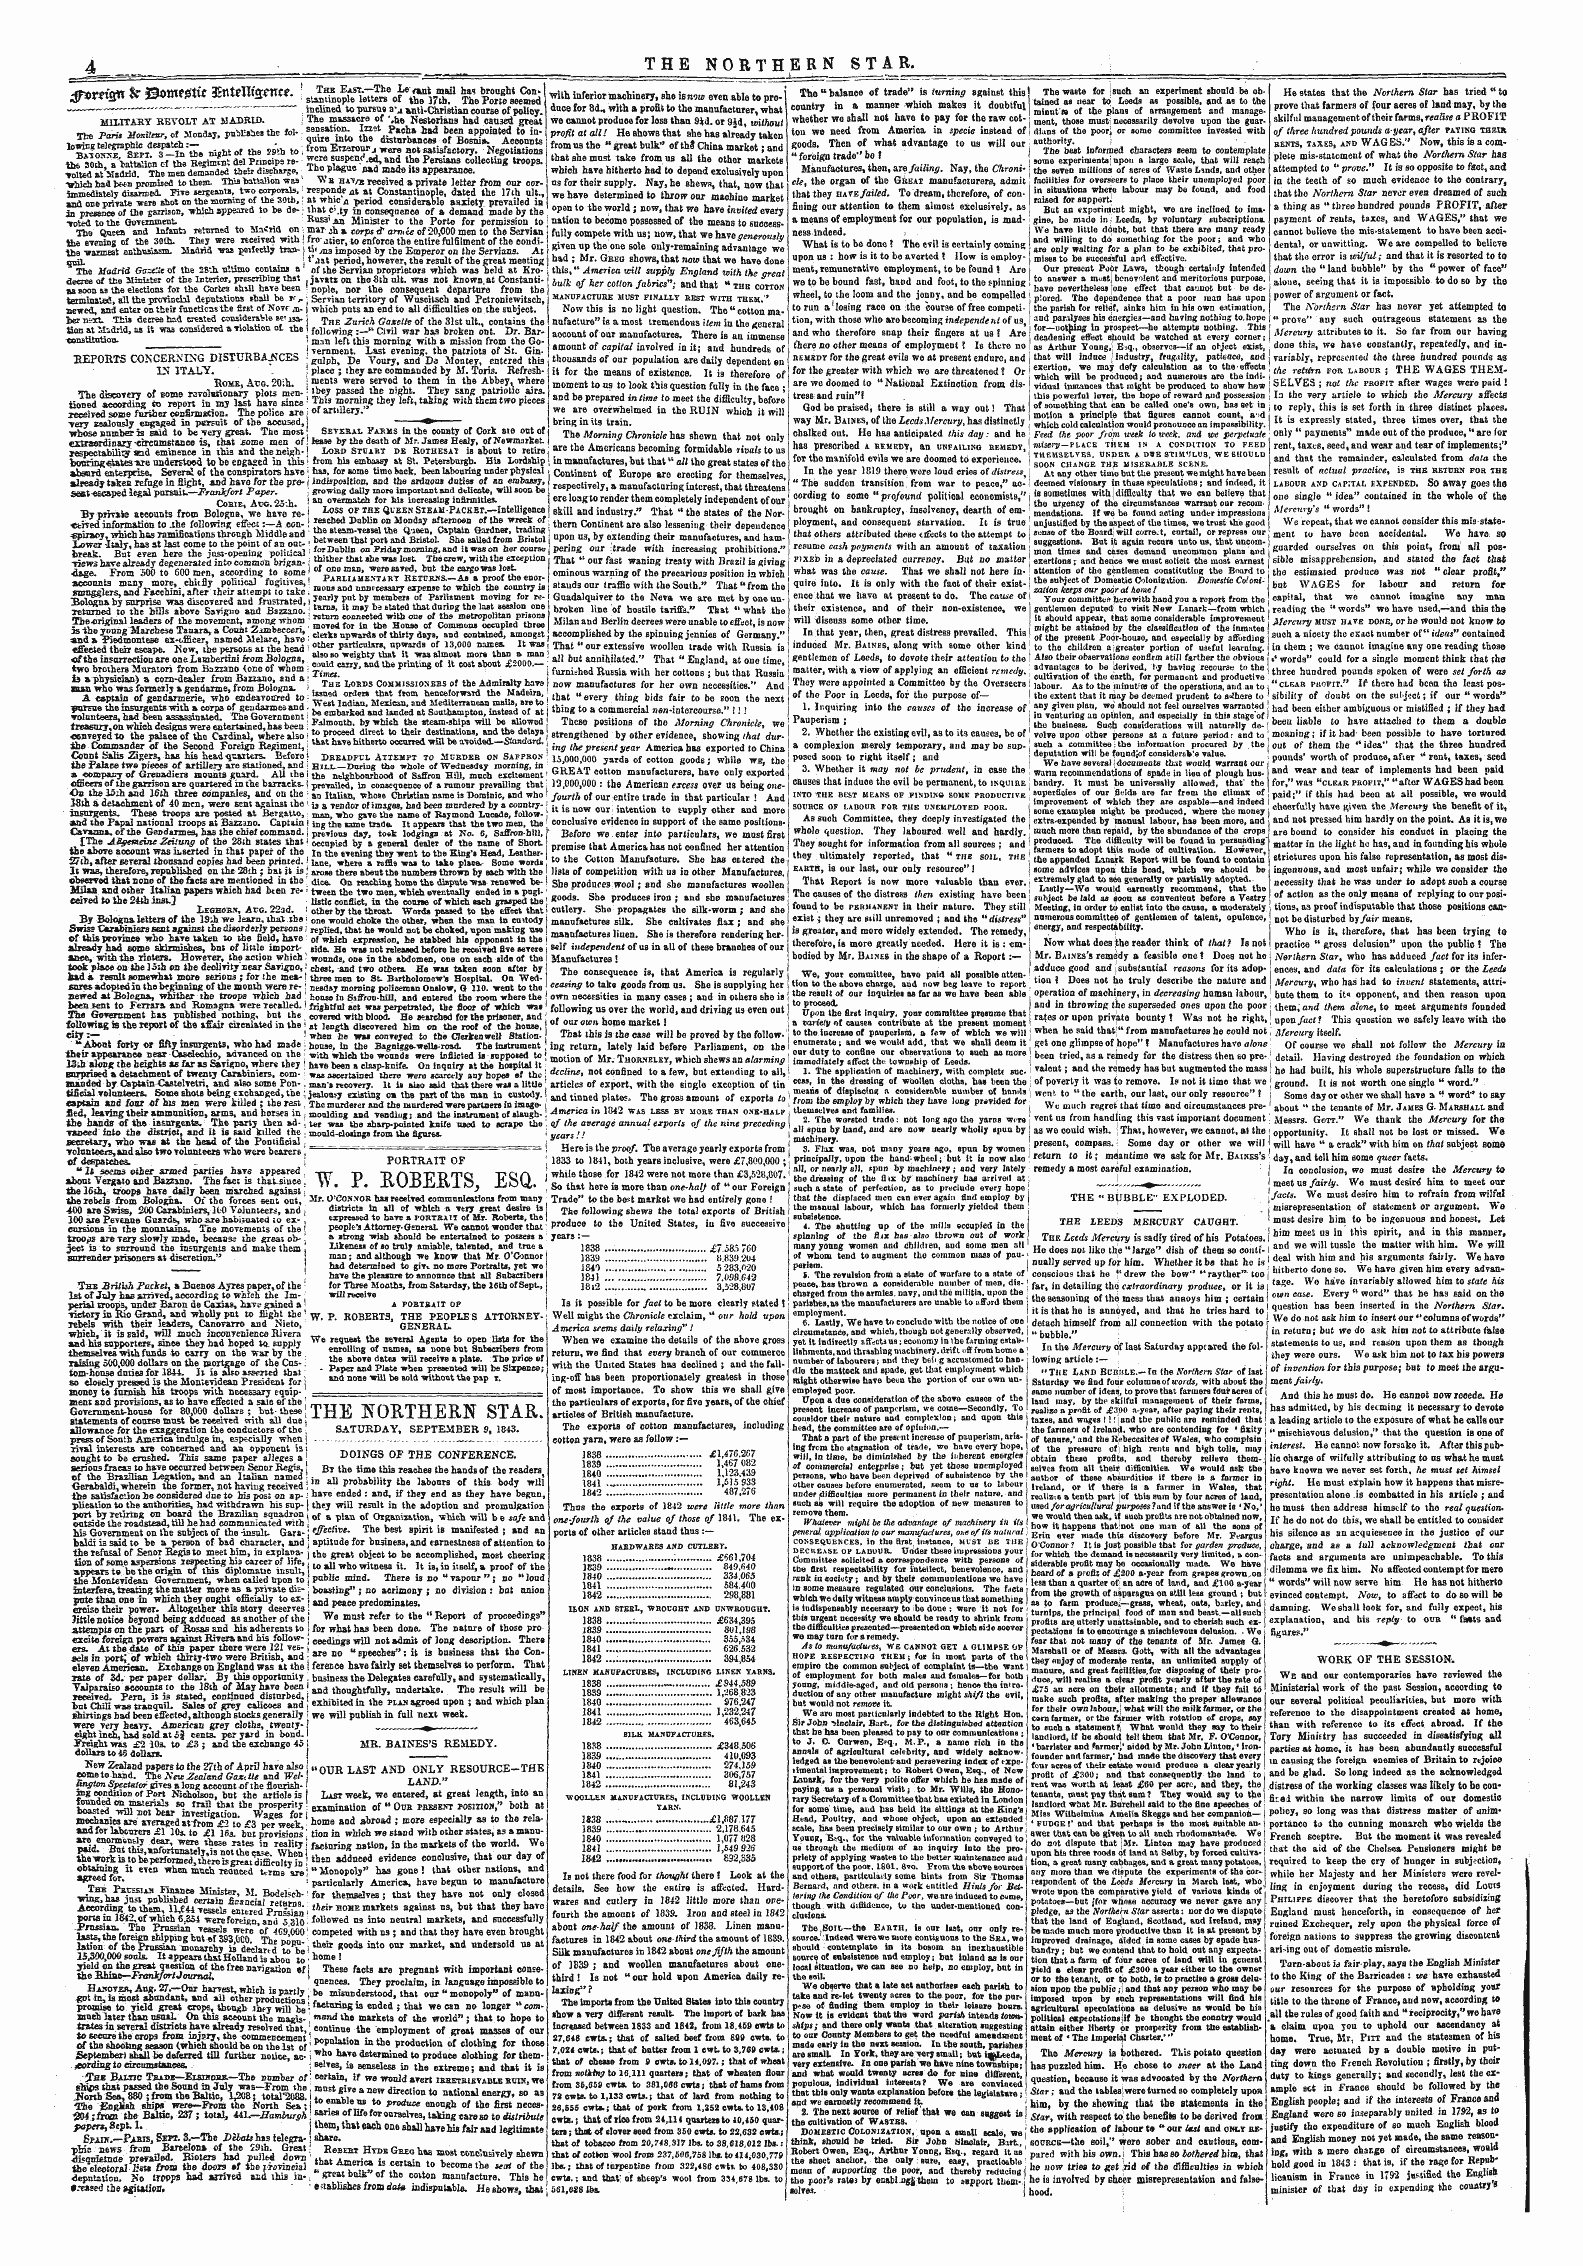 Northern Star (1837-1852): jS F Y, 3rd edition: 4